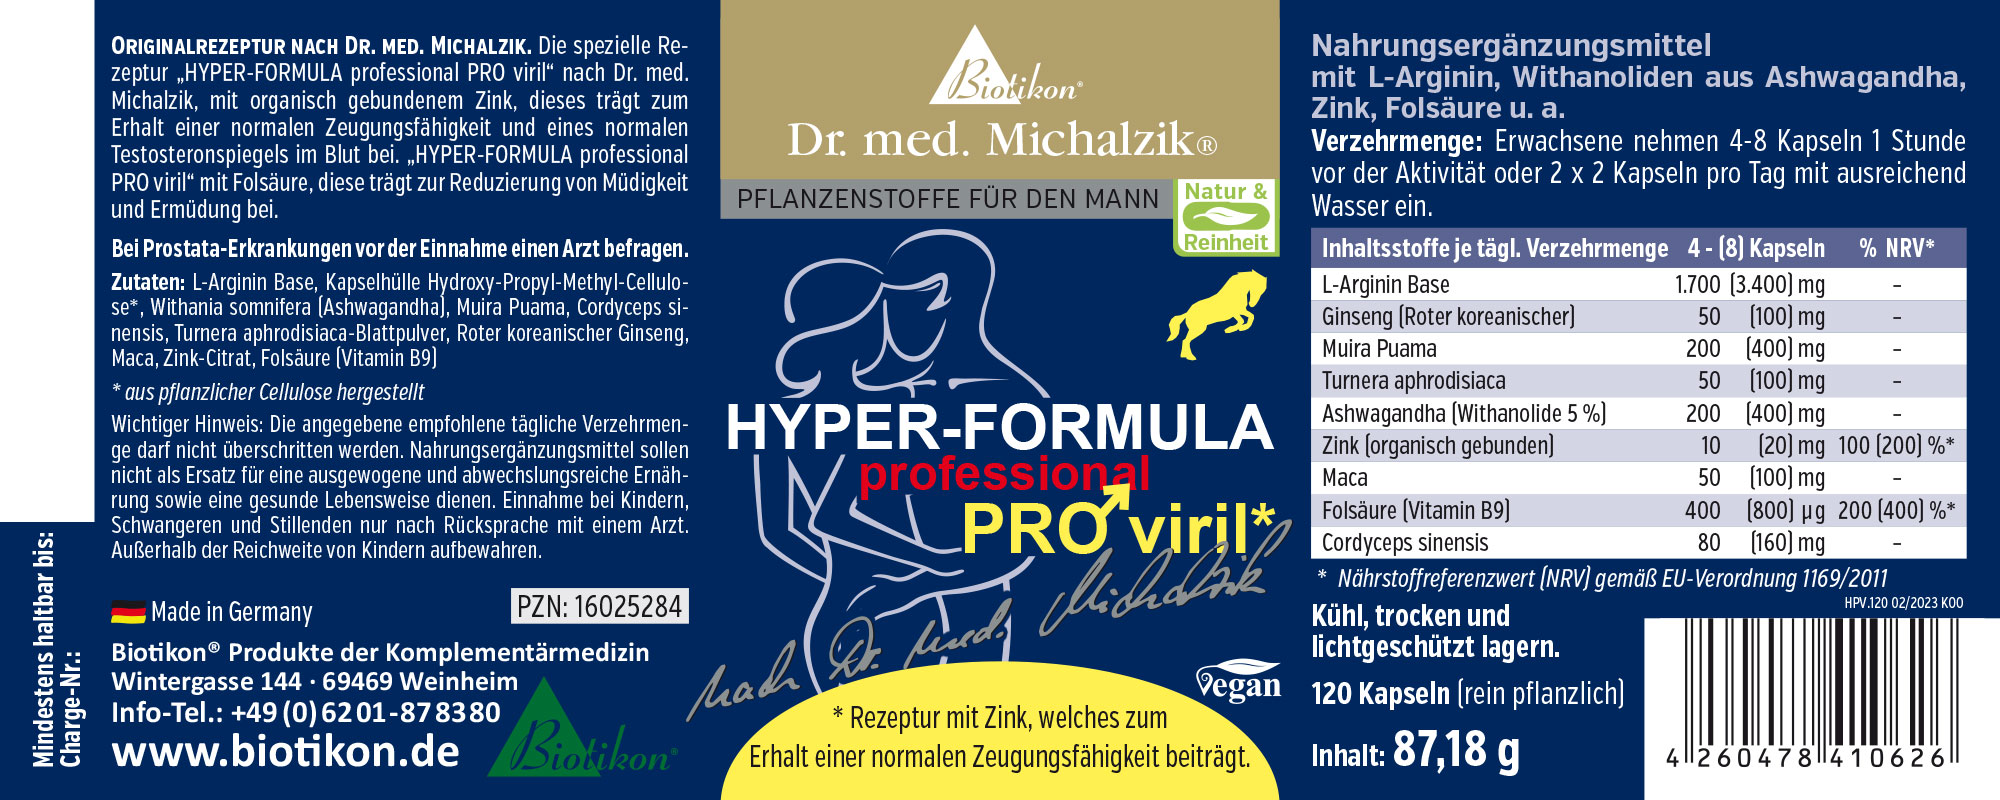 Hyper PRO viril stamina by Dr. med. Michalzik